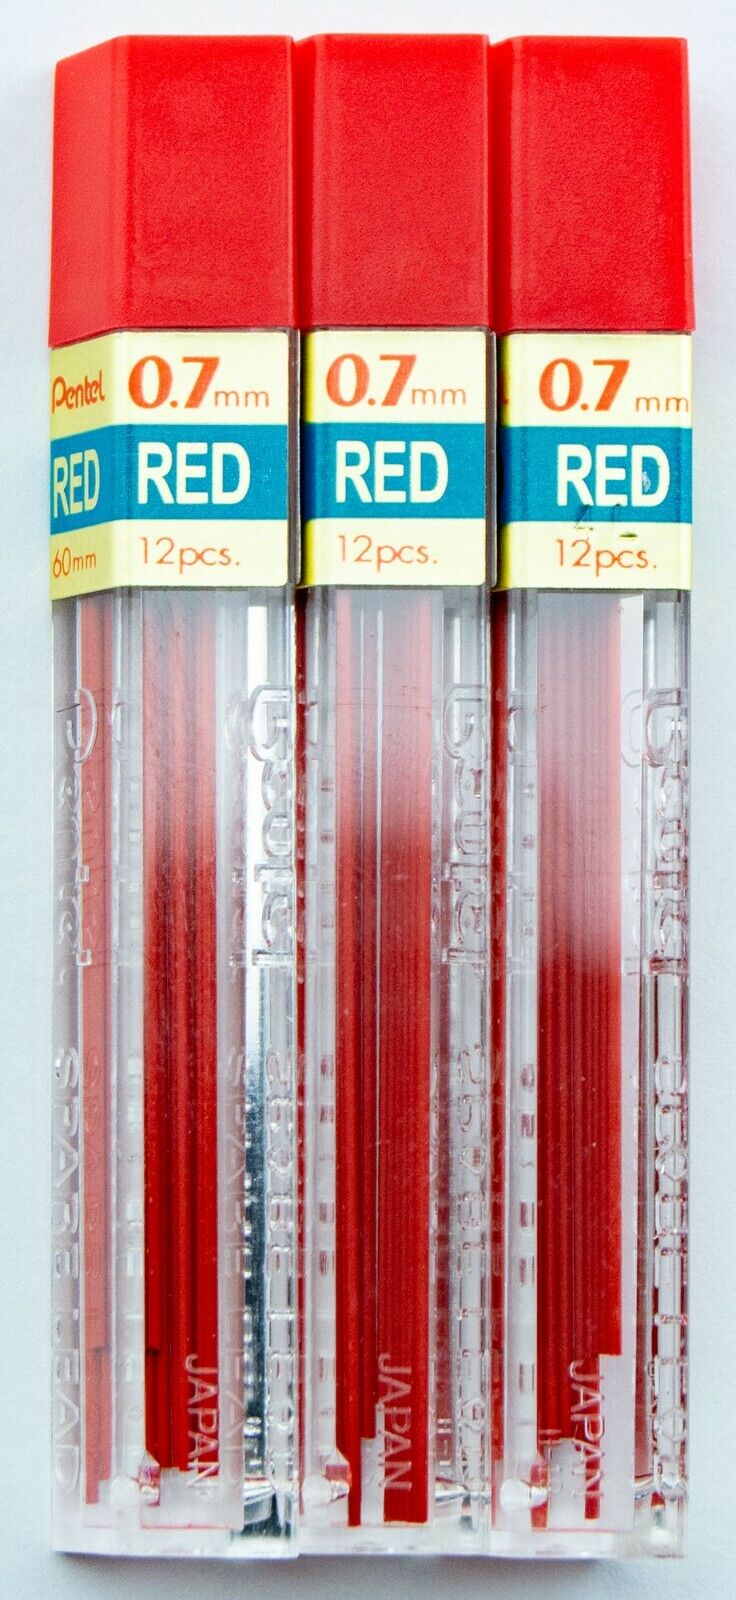 Pentel Super Hi-Polymer 0.7mm Red Mechanical Pencil Lead Refills 3 Tubes 36pcs